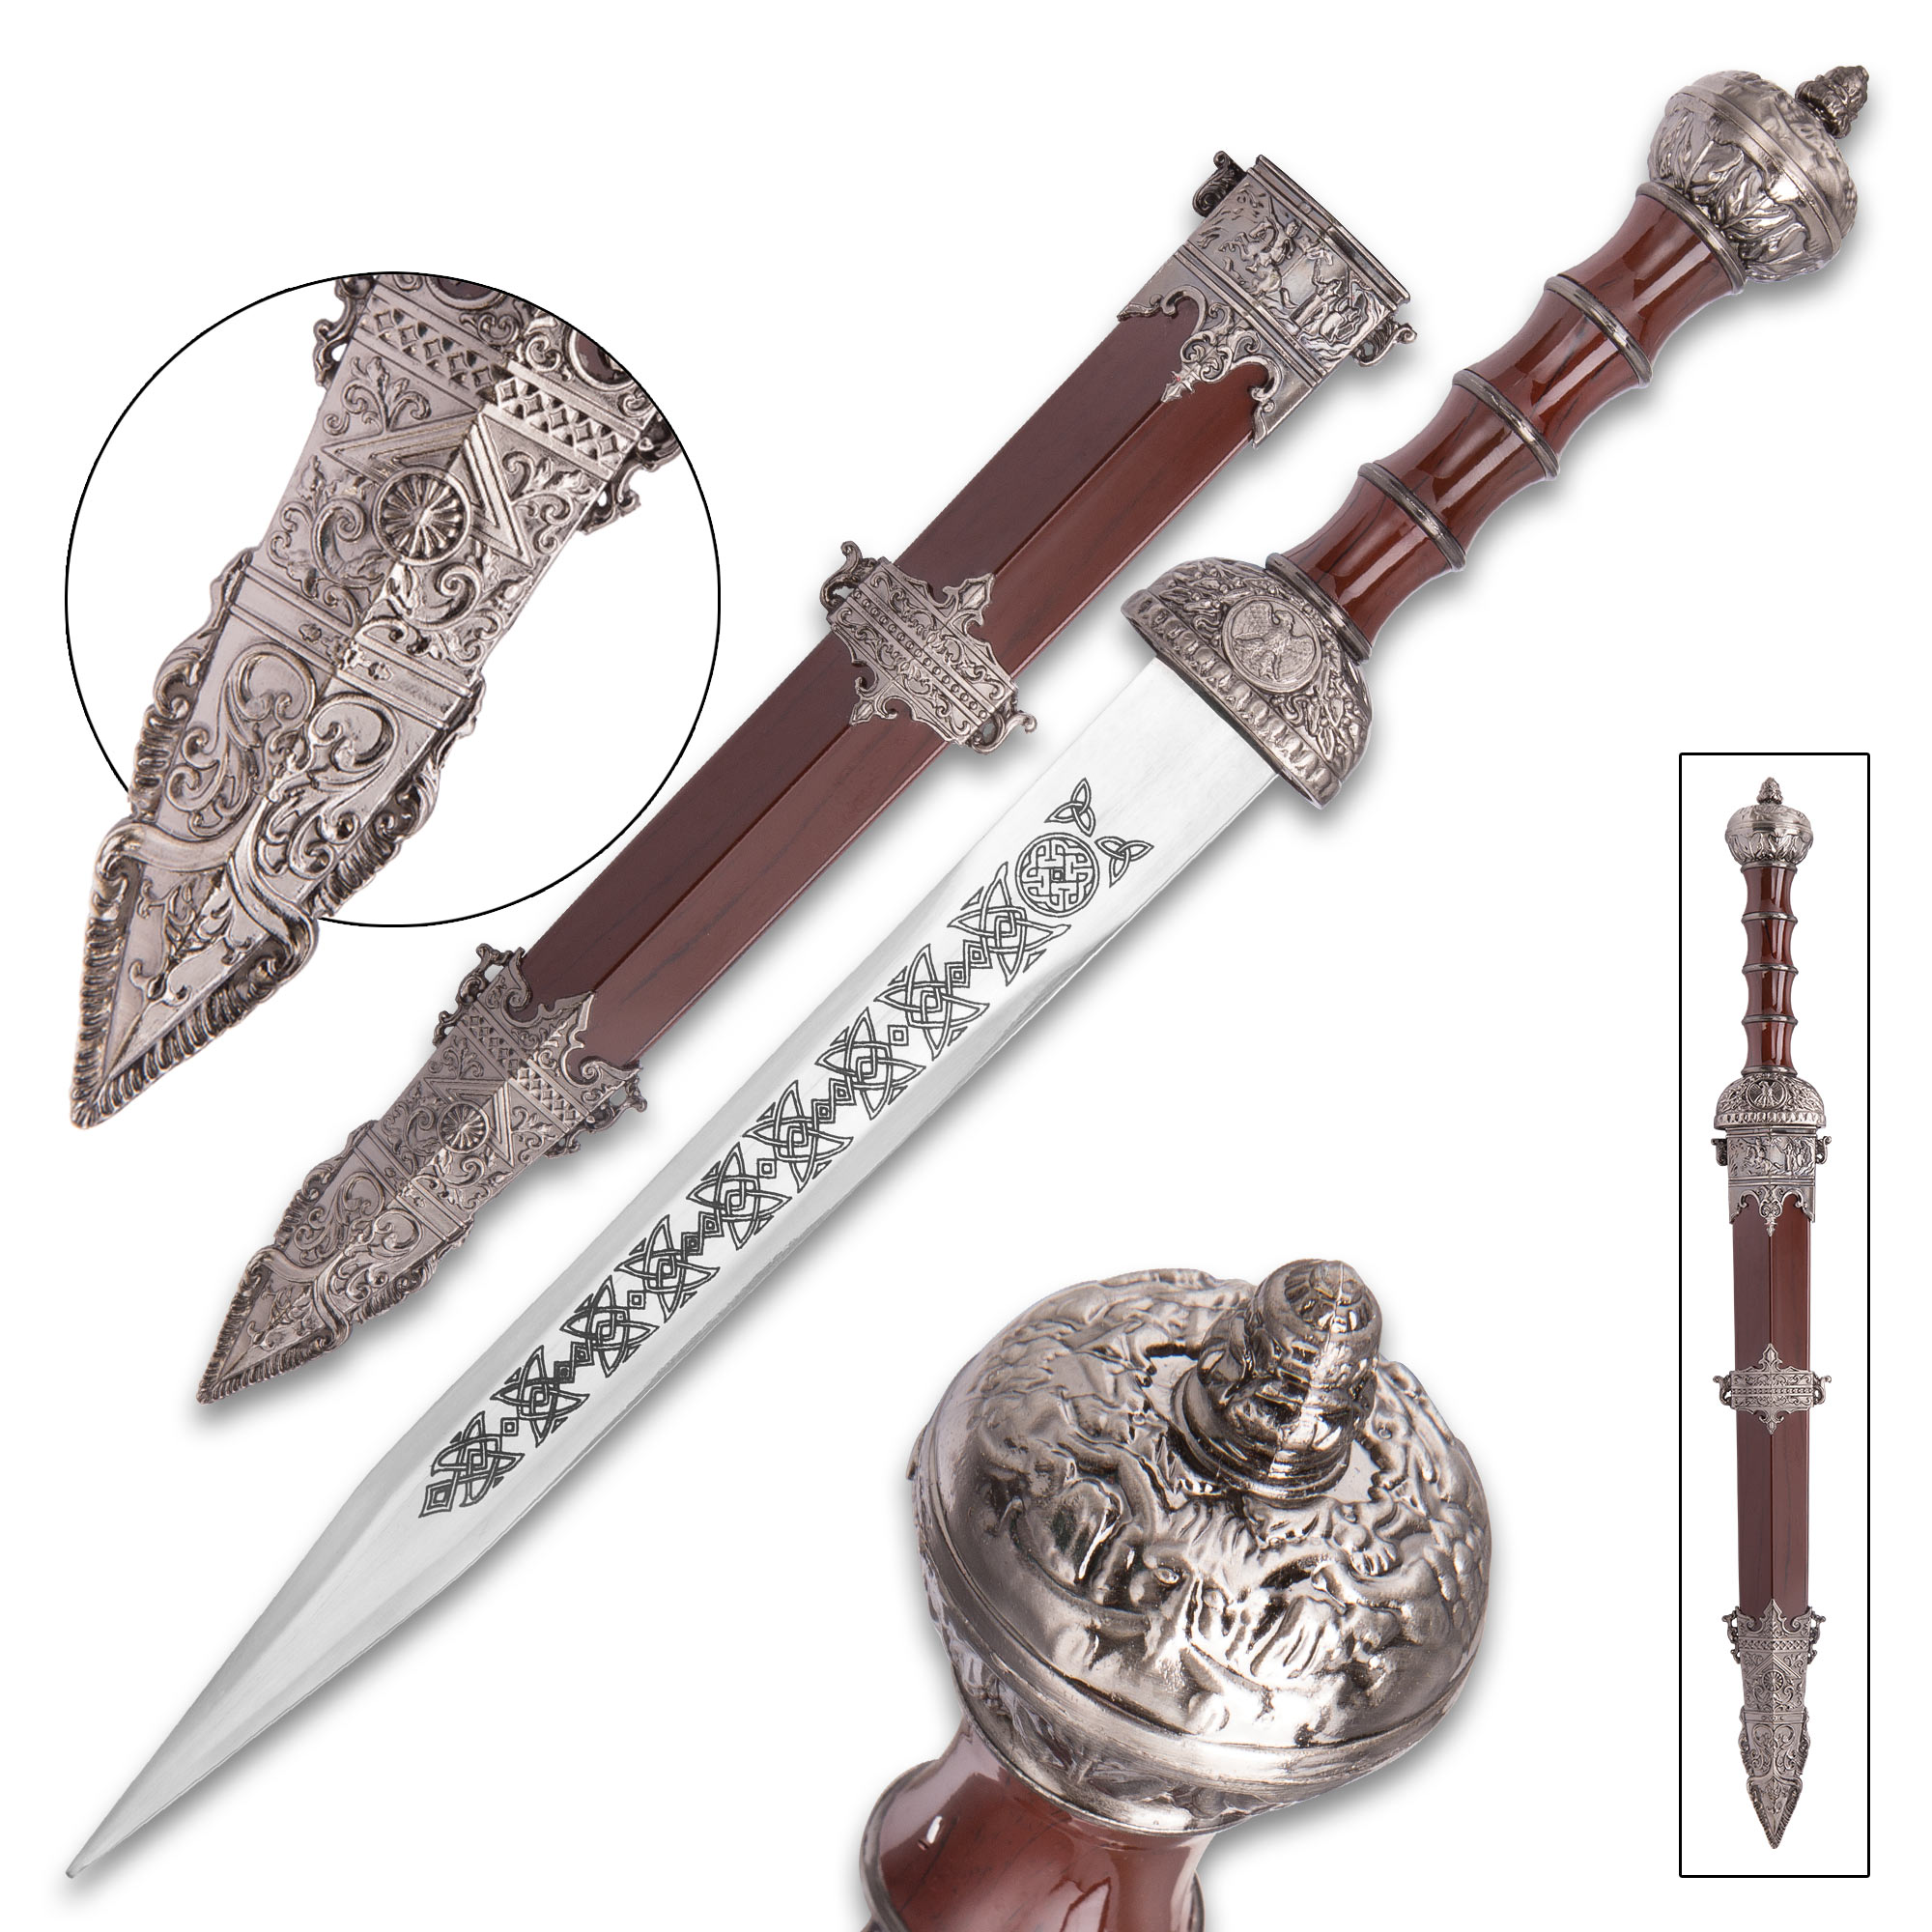 Medieval swords - quietryte